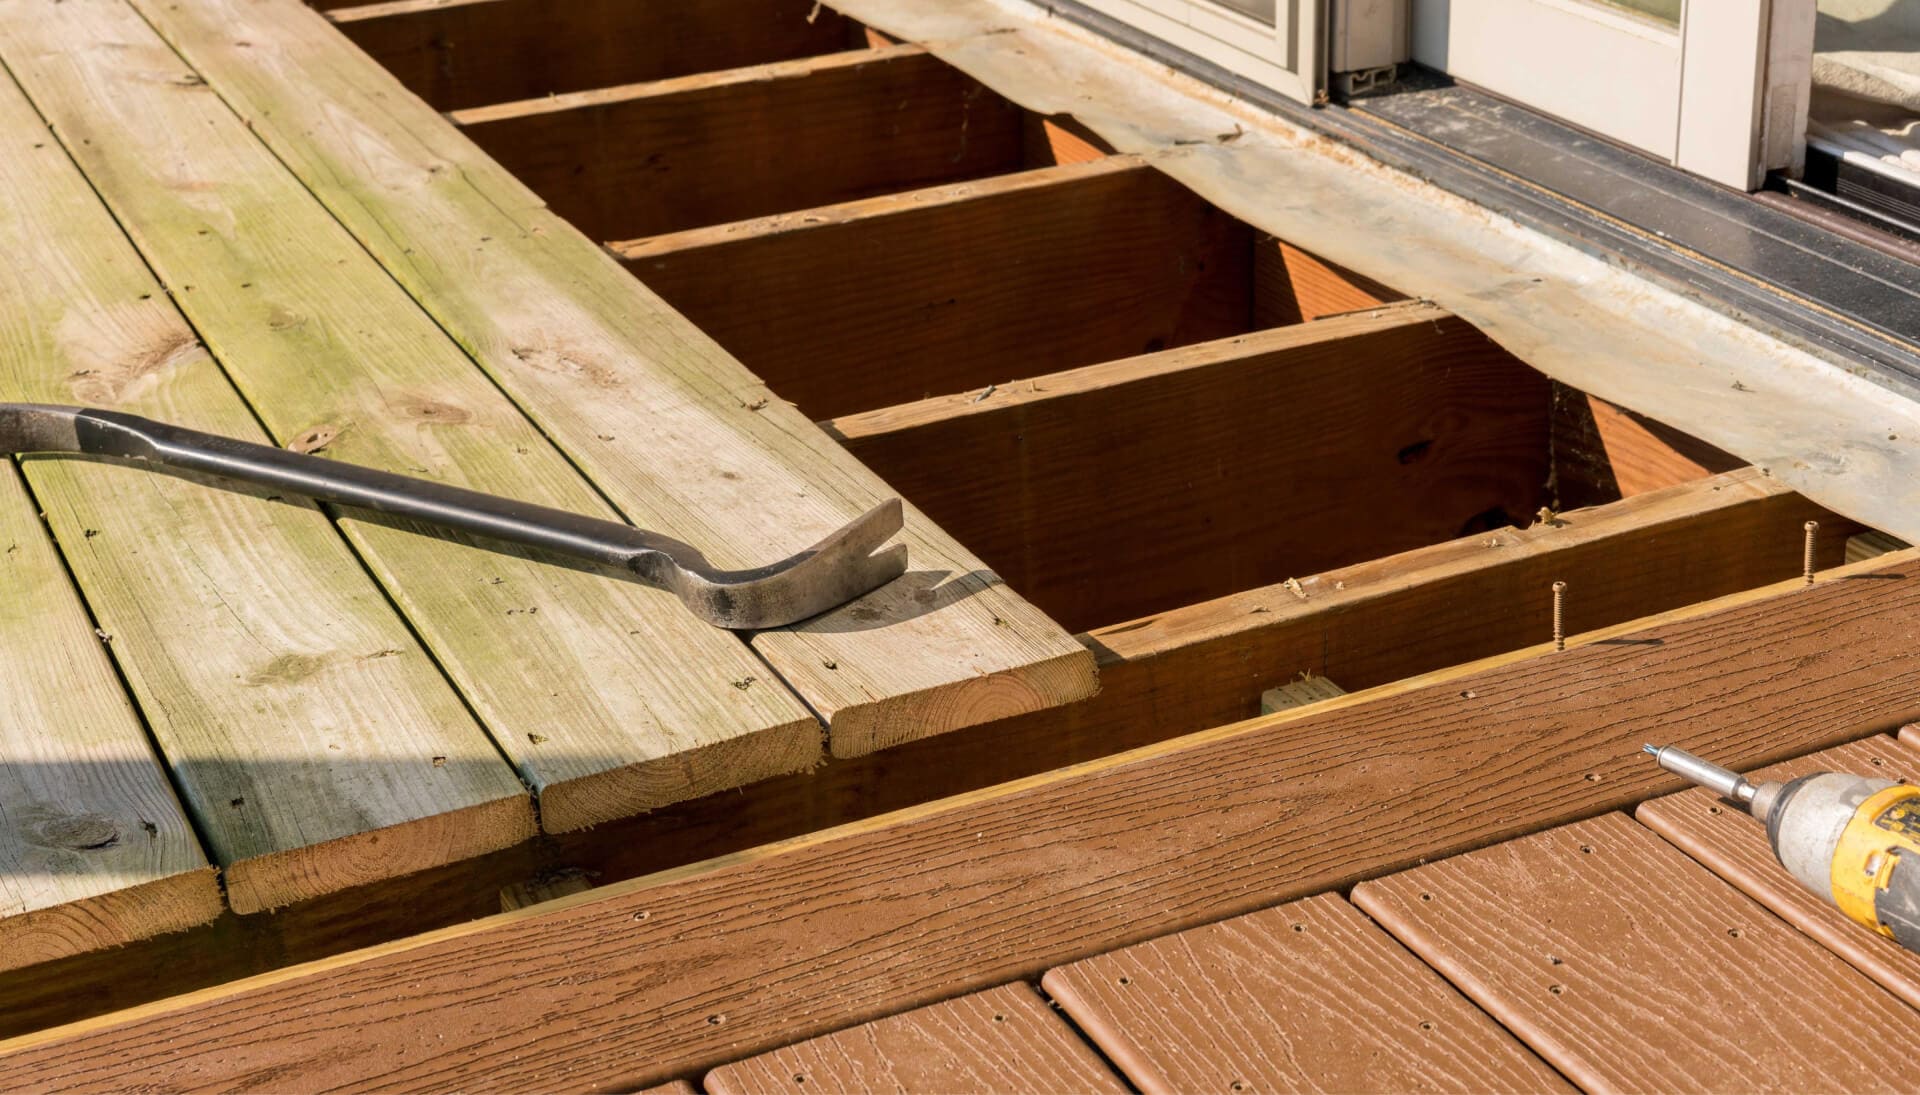 We offer the best deck repair services in Everett, Washington